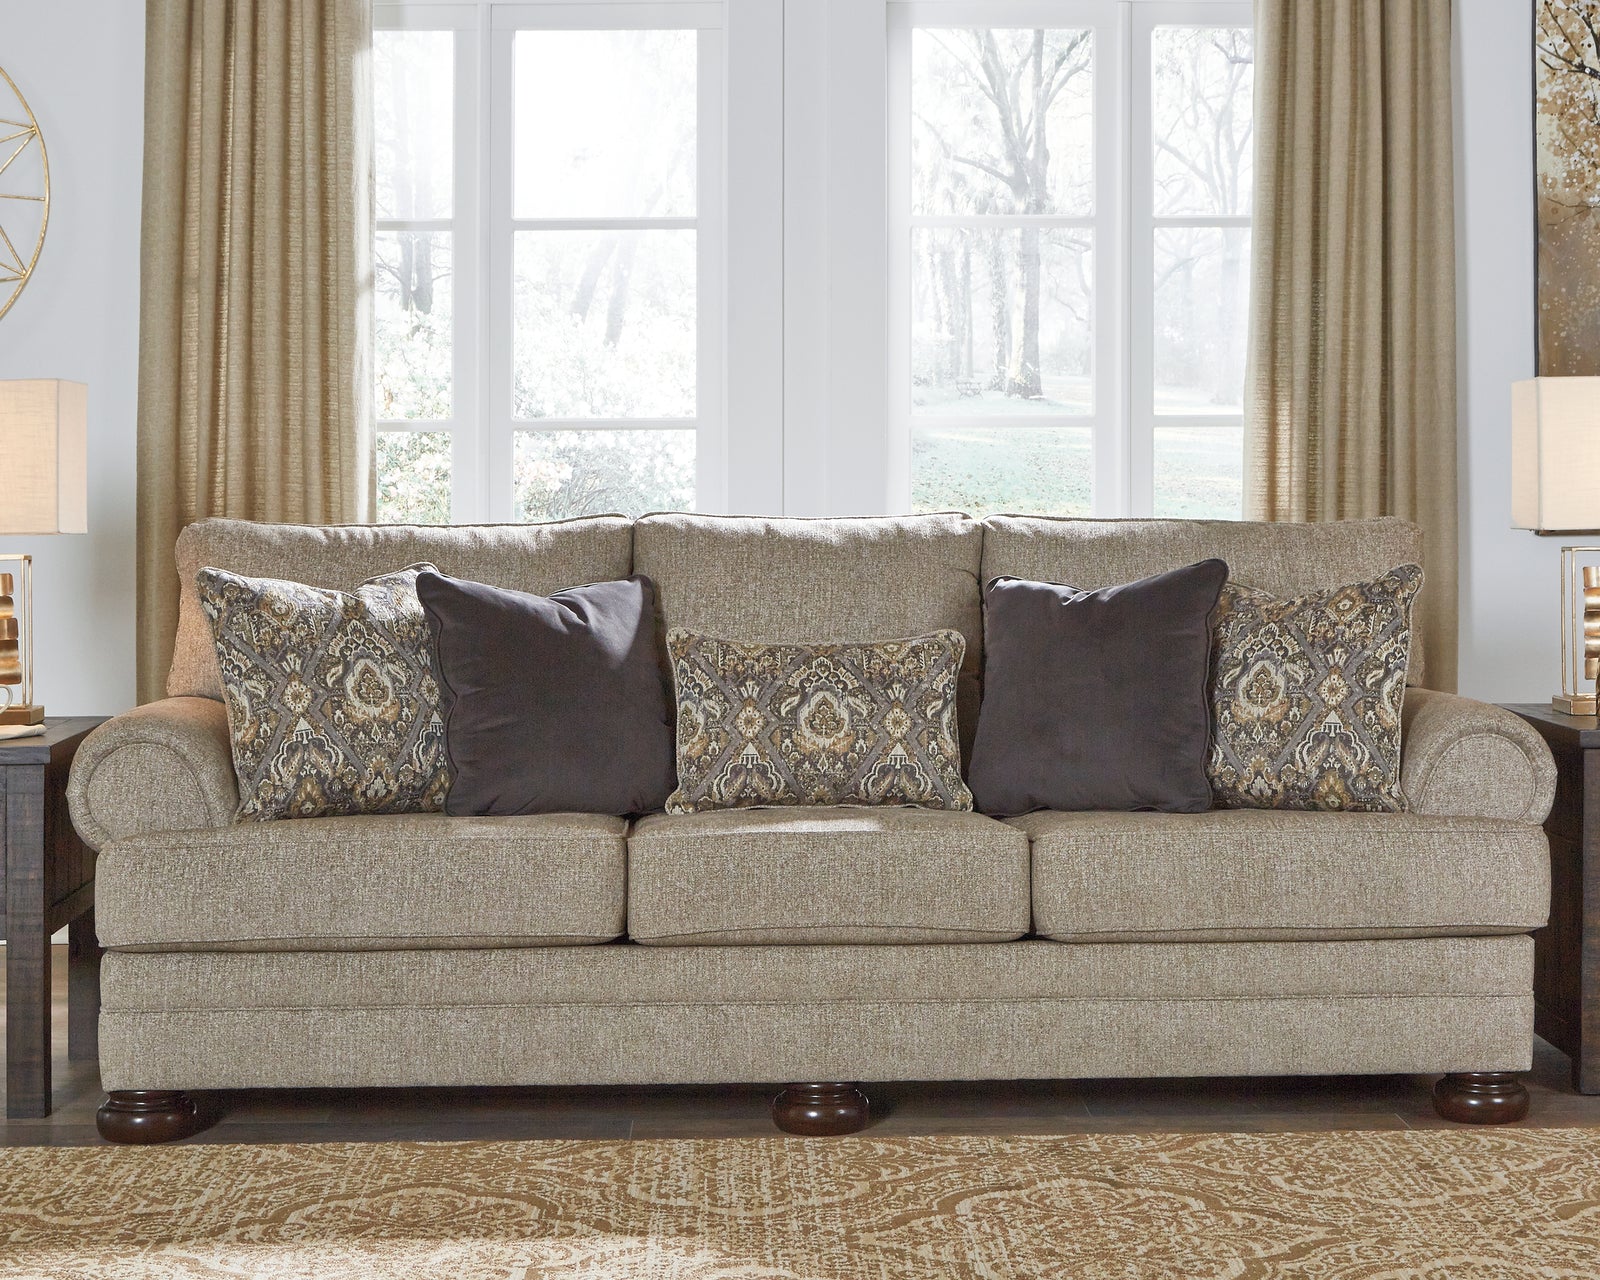 Kananwood Oatmeal Textured Sofa